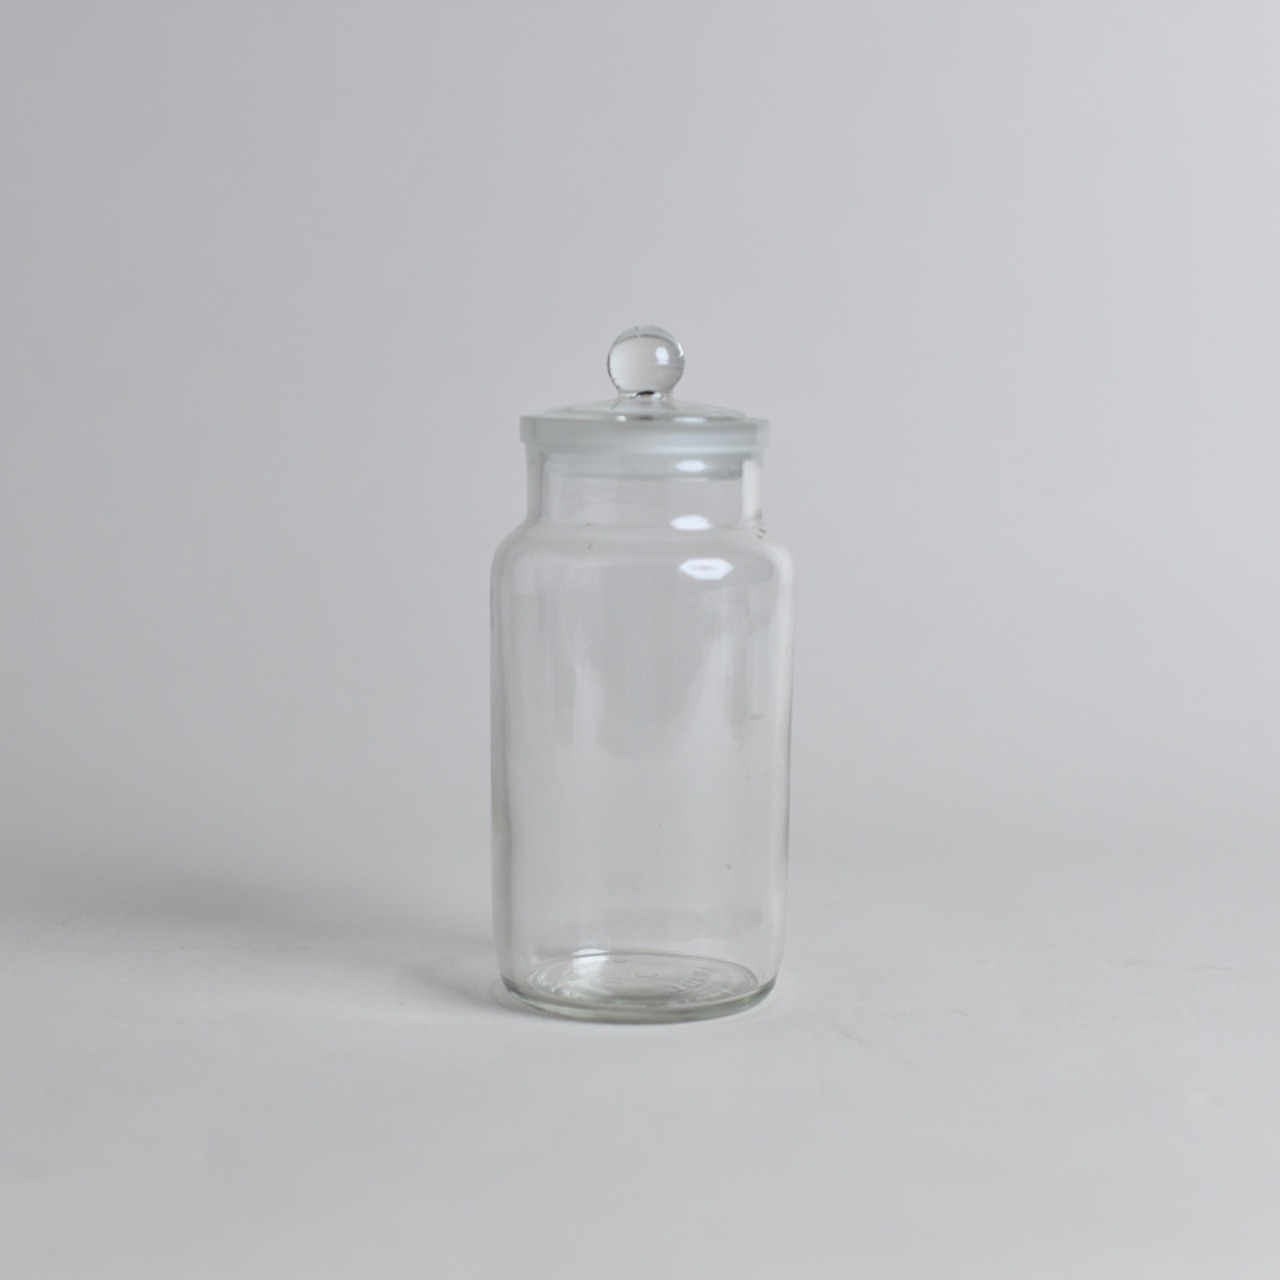 Glass Canister / ガラス キャニスター〈花瓶 / ボトル / ディスプレイ 〉1806-0185-03